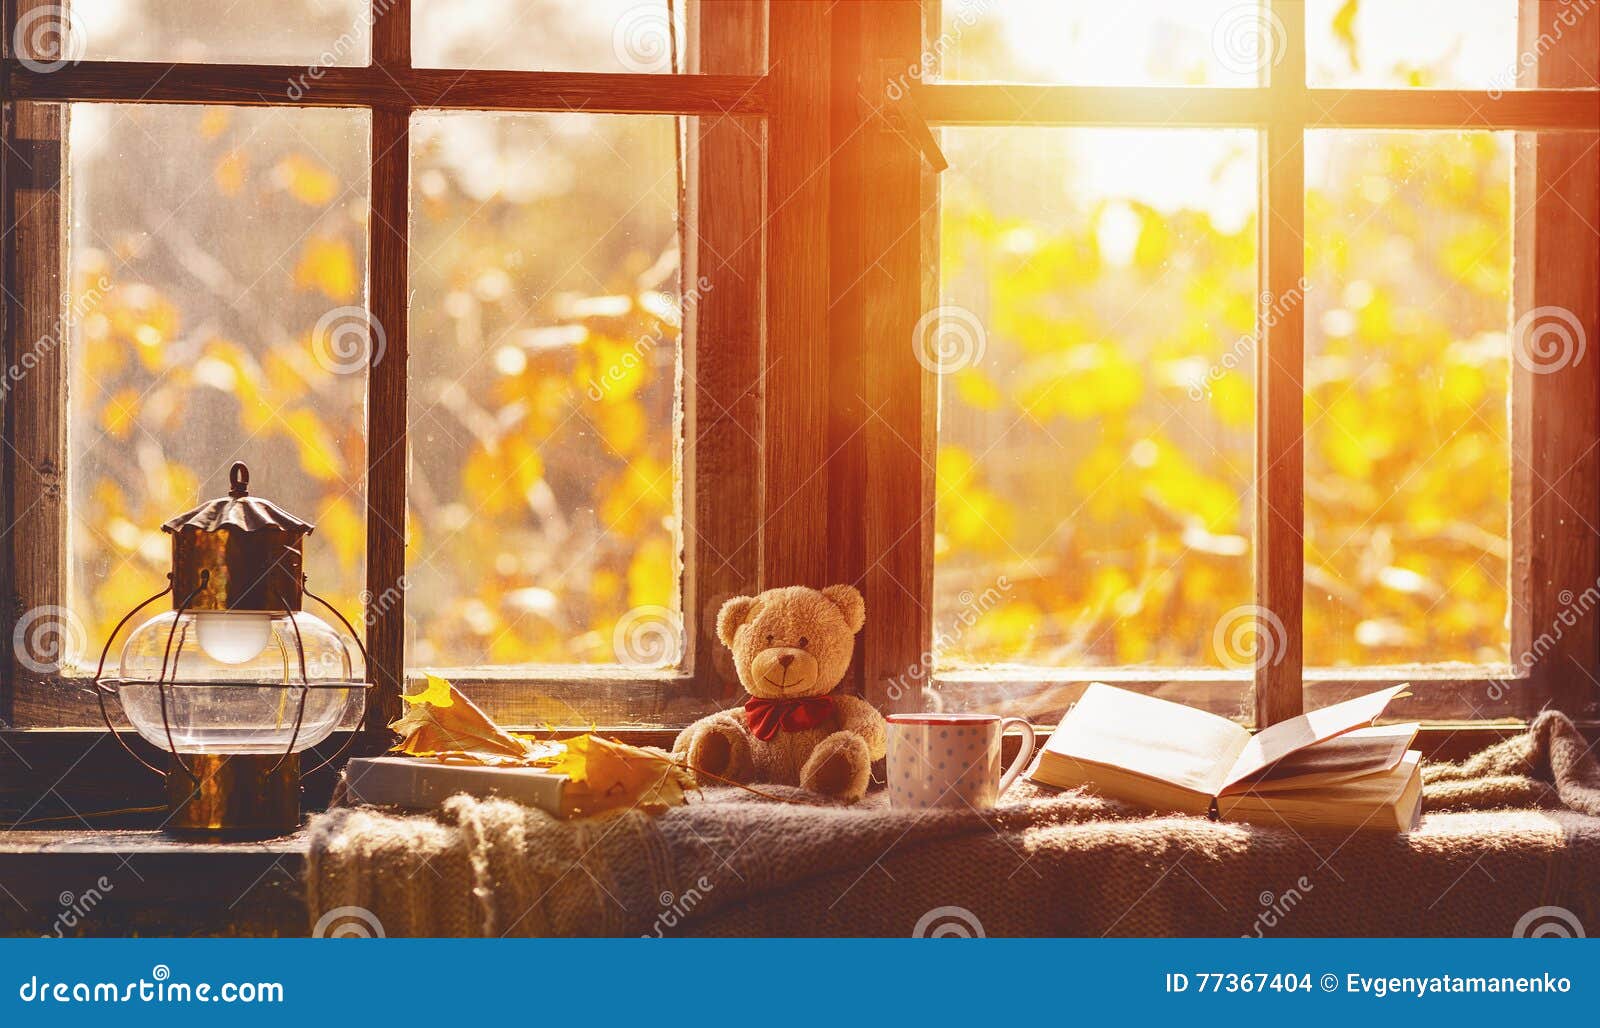 fall. cozy window with autumn leaves, book, mug of tea